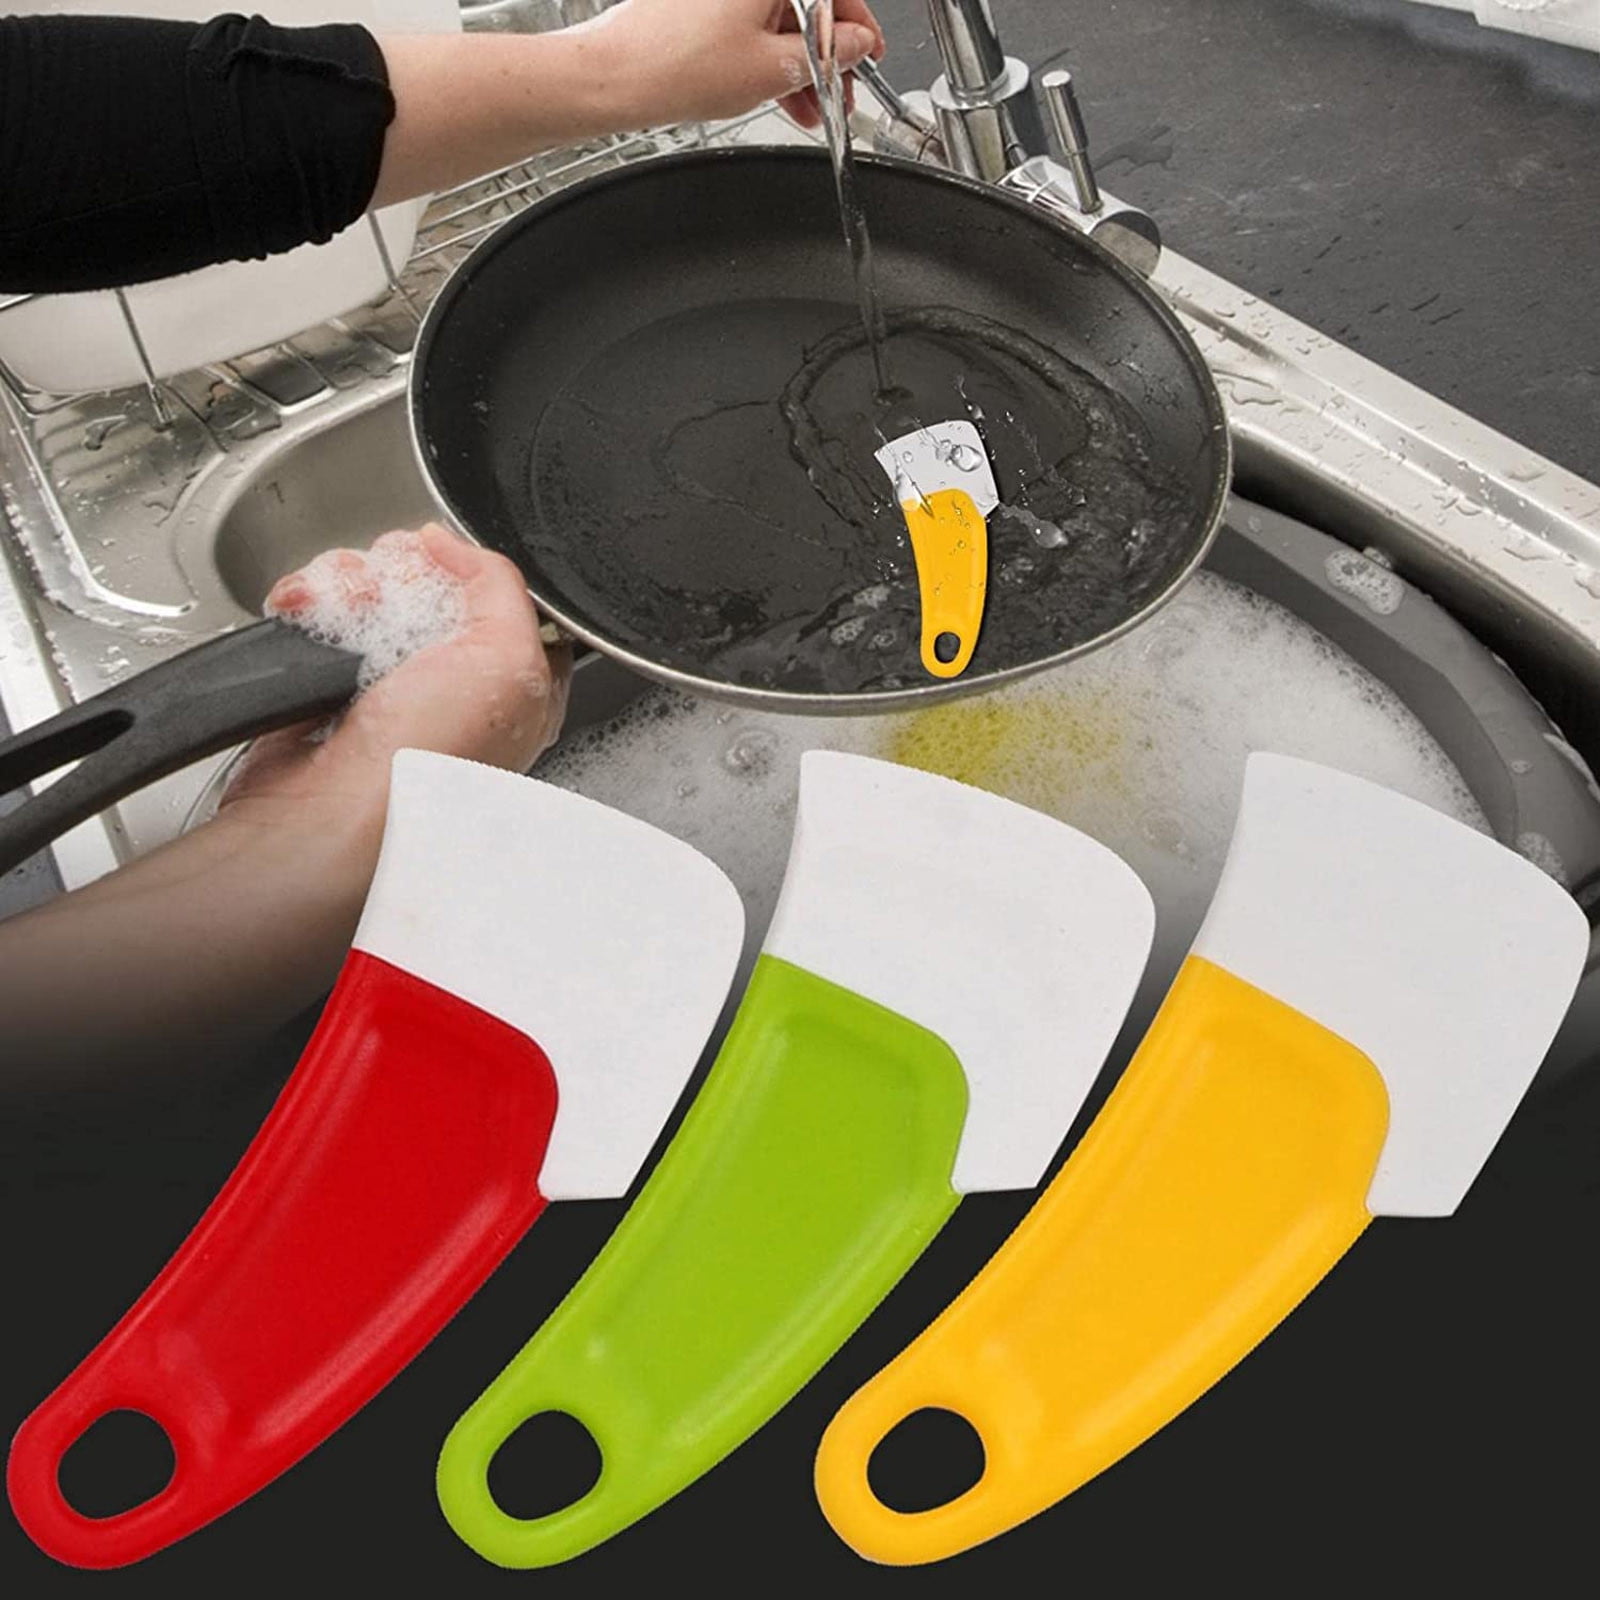 Audoloku Silicone Pan Scraper Dish Cleaning Spatula Bowl Scraper Dish Scraper Non Stick Kitchen Scraper Pan Rubber Cleaning Spatula Pot Cleaning Tool 2 Pcs (